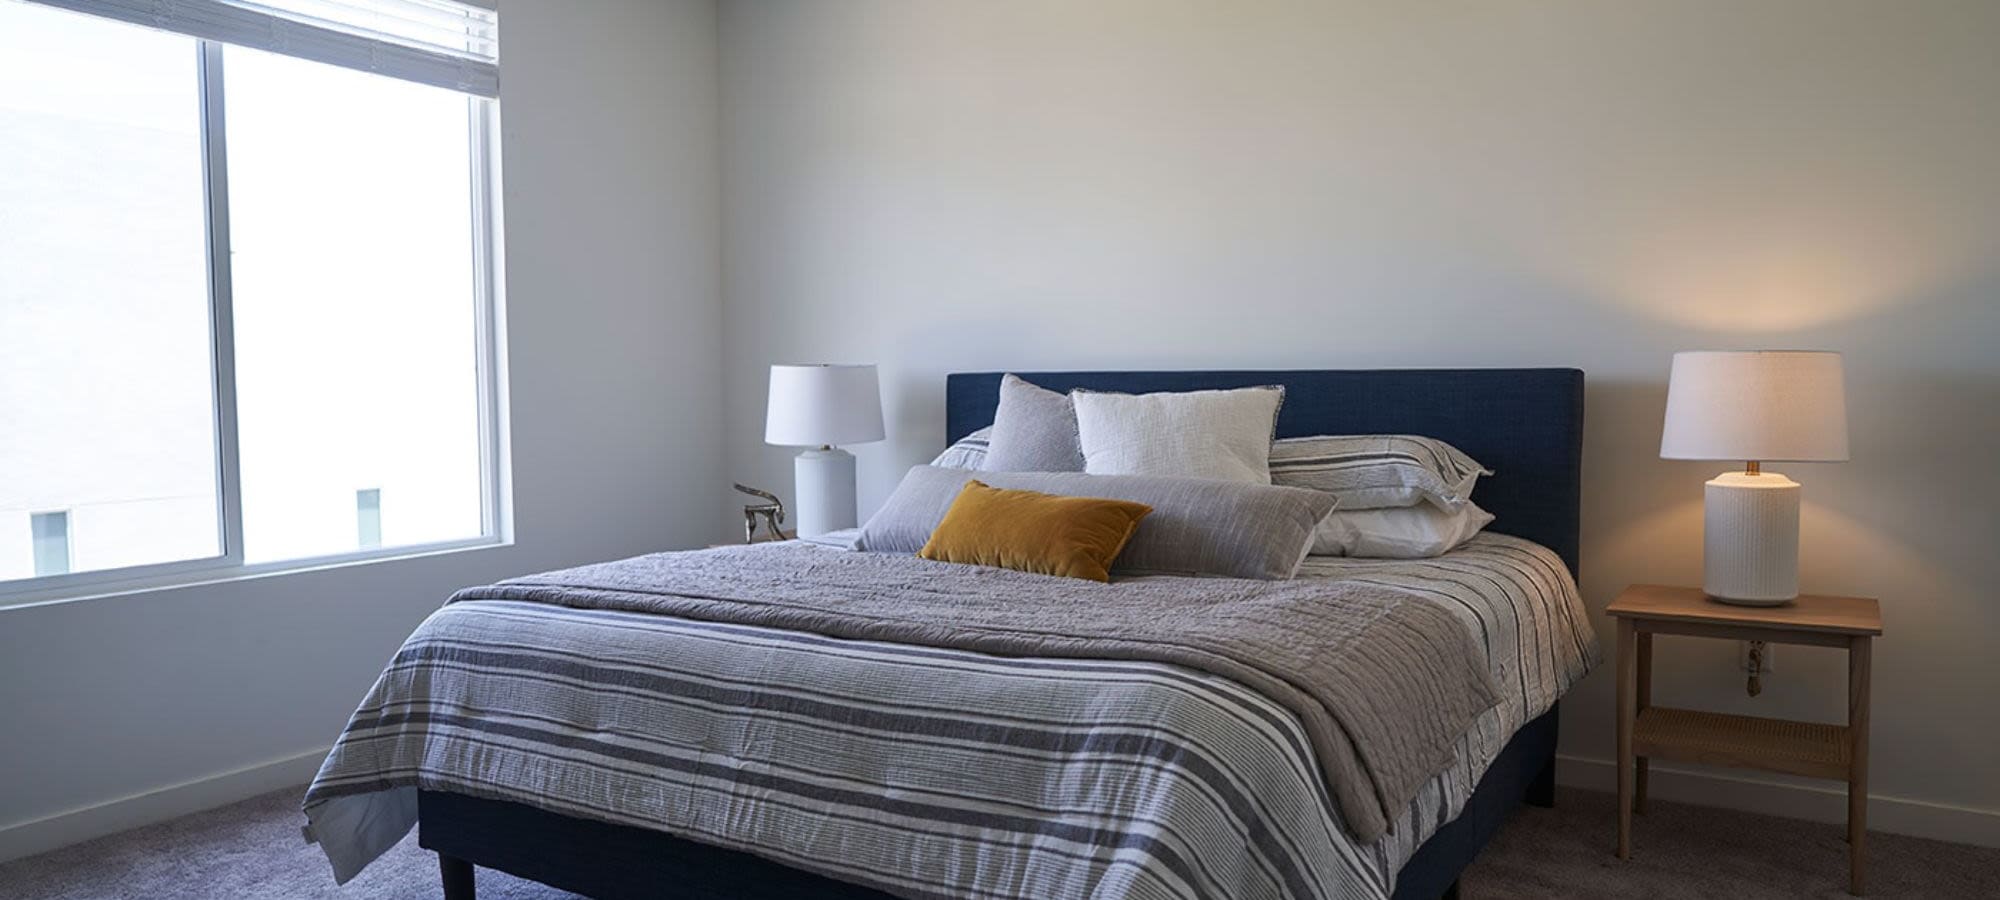 Model bedroom with ample amounts of natural light at Novella at Biltmore in Phoenix, Arizona